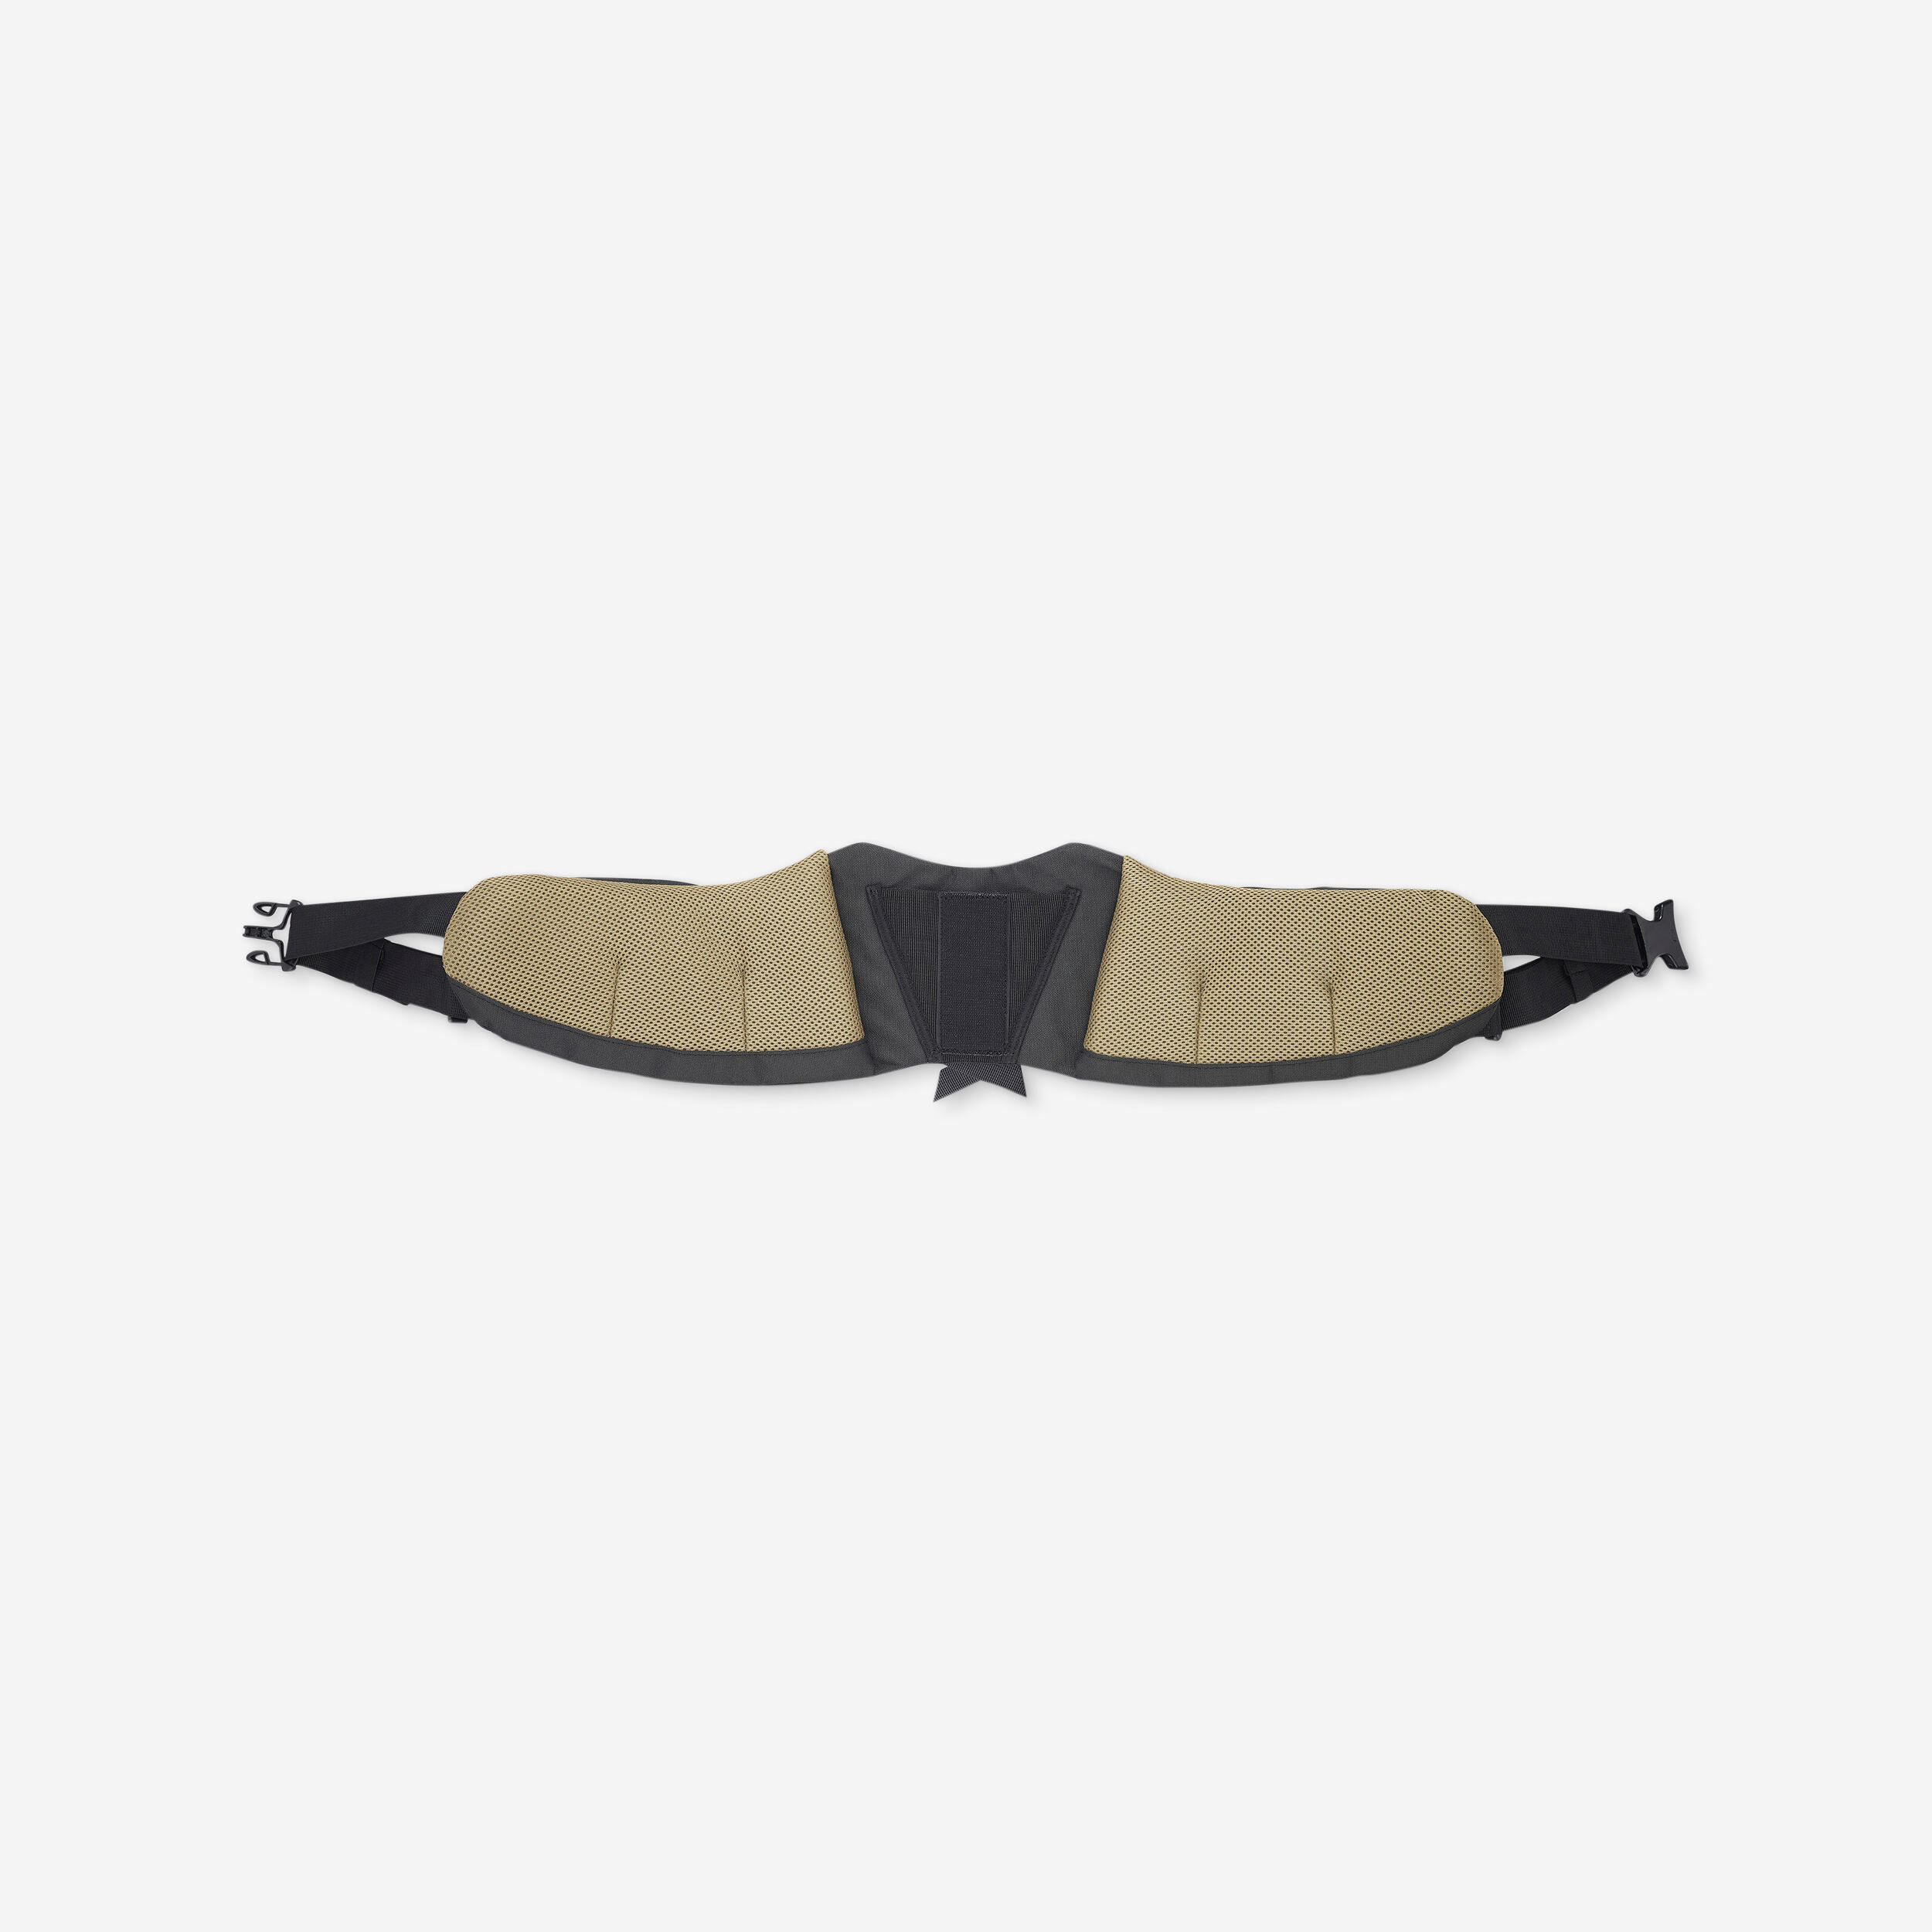 FORCLAZ Replacement belt for MT900 SYMBIUM backpack for men